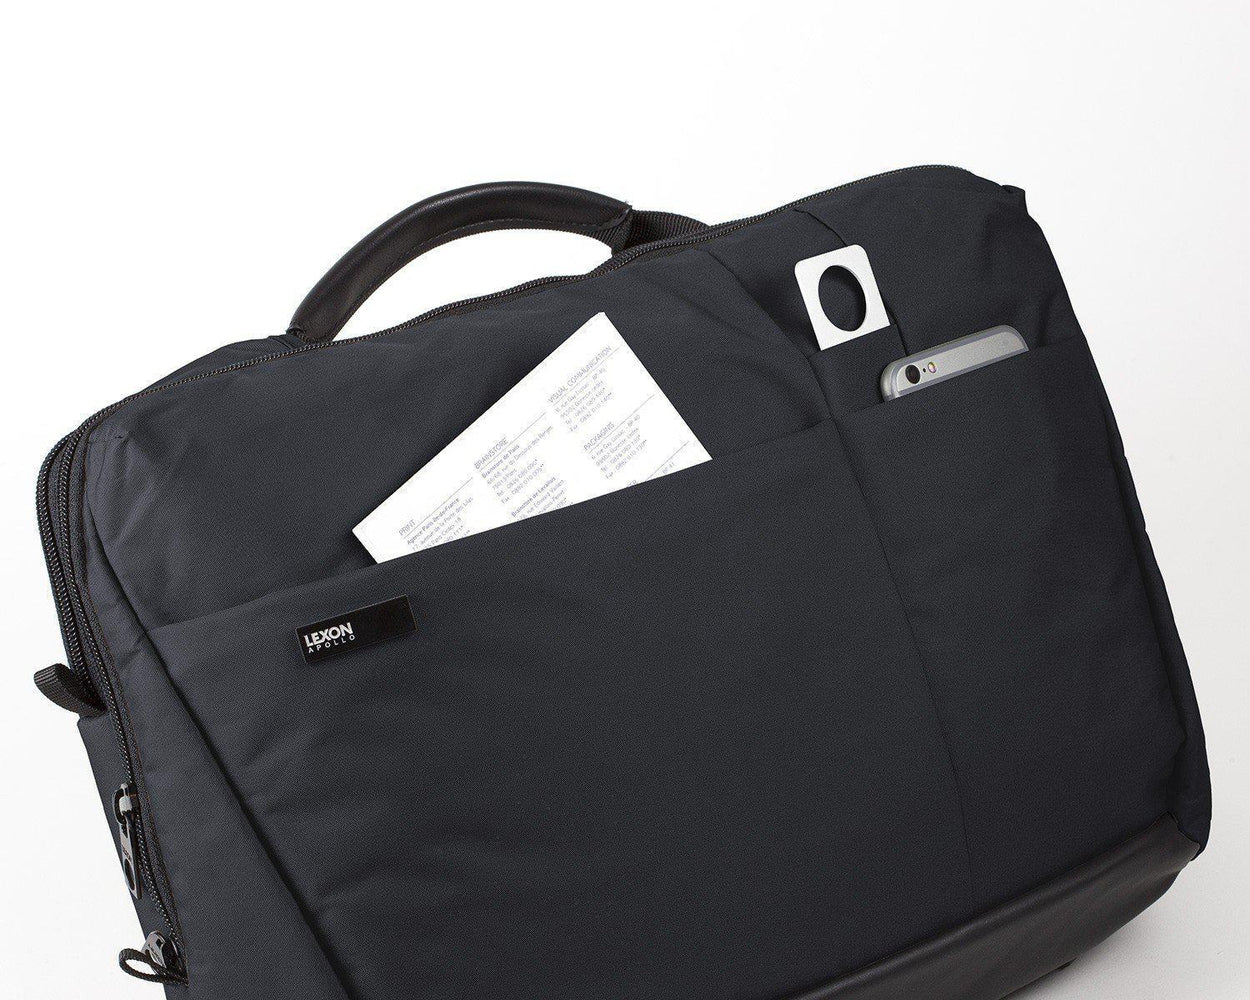 Business-LEXON Design Apollo Urban Sykkel skulderveske for Laptop-Pc 15"-12 liter Sort-BagBrokers